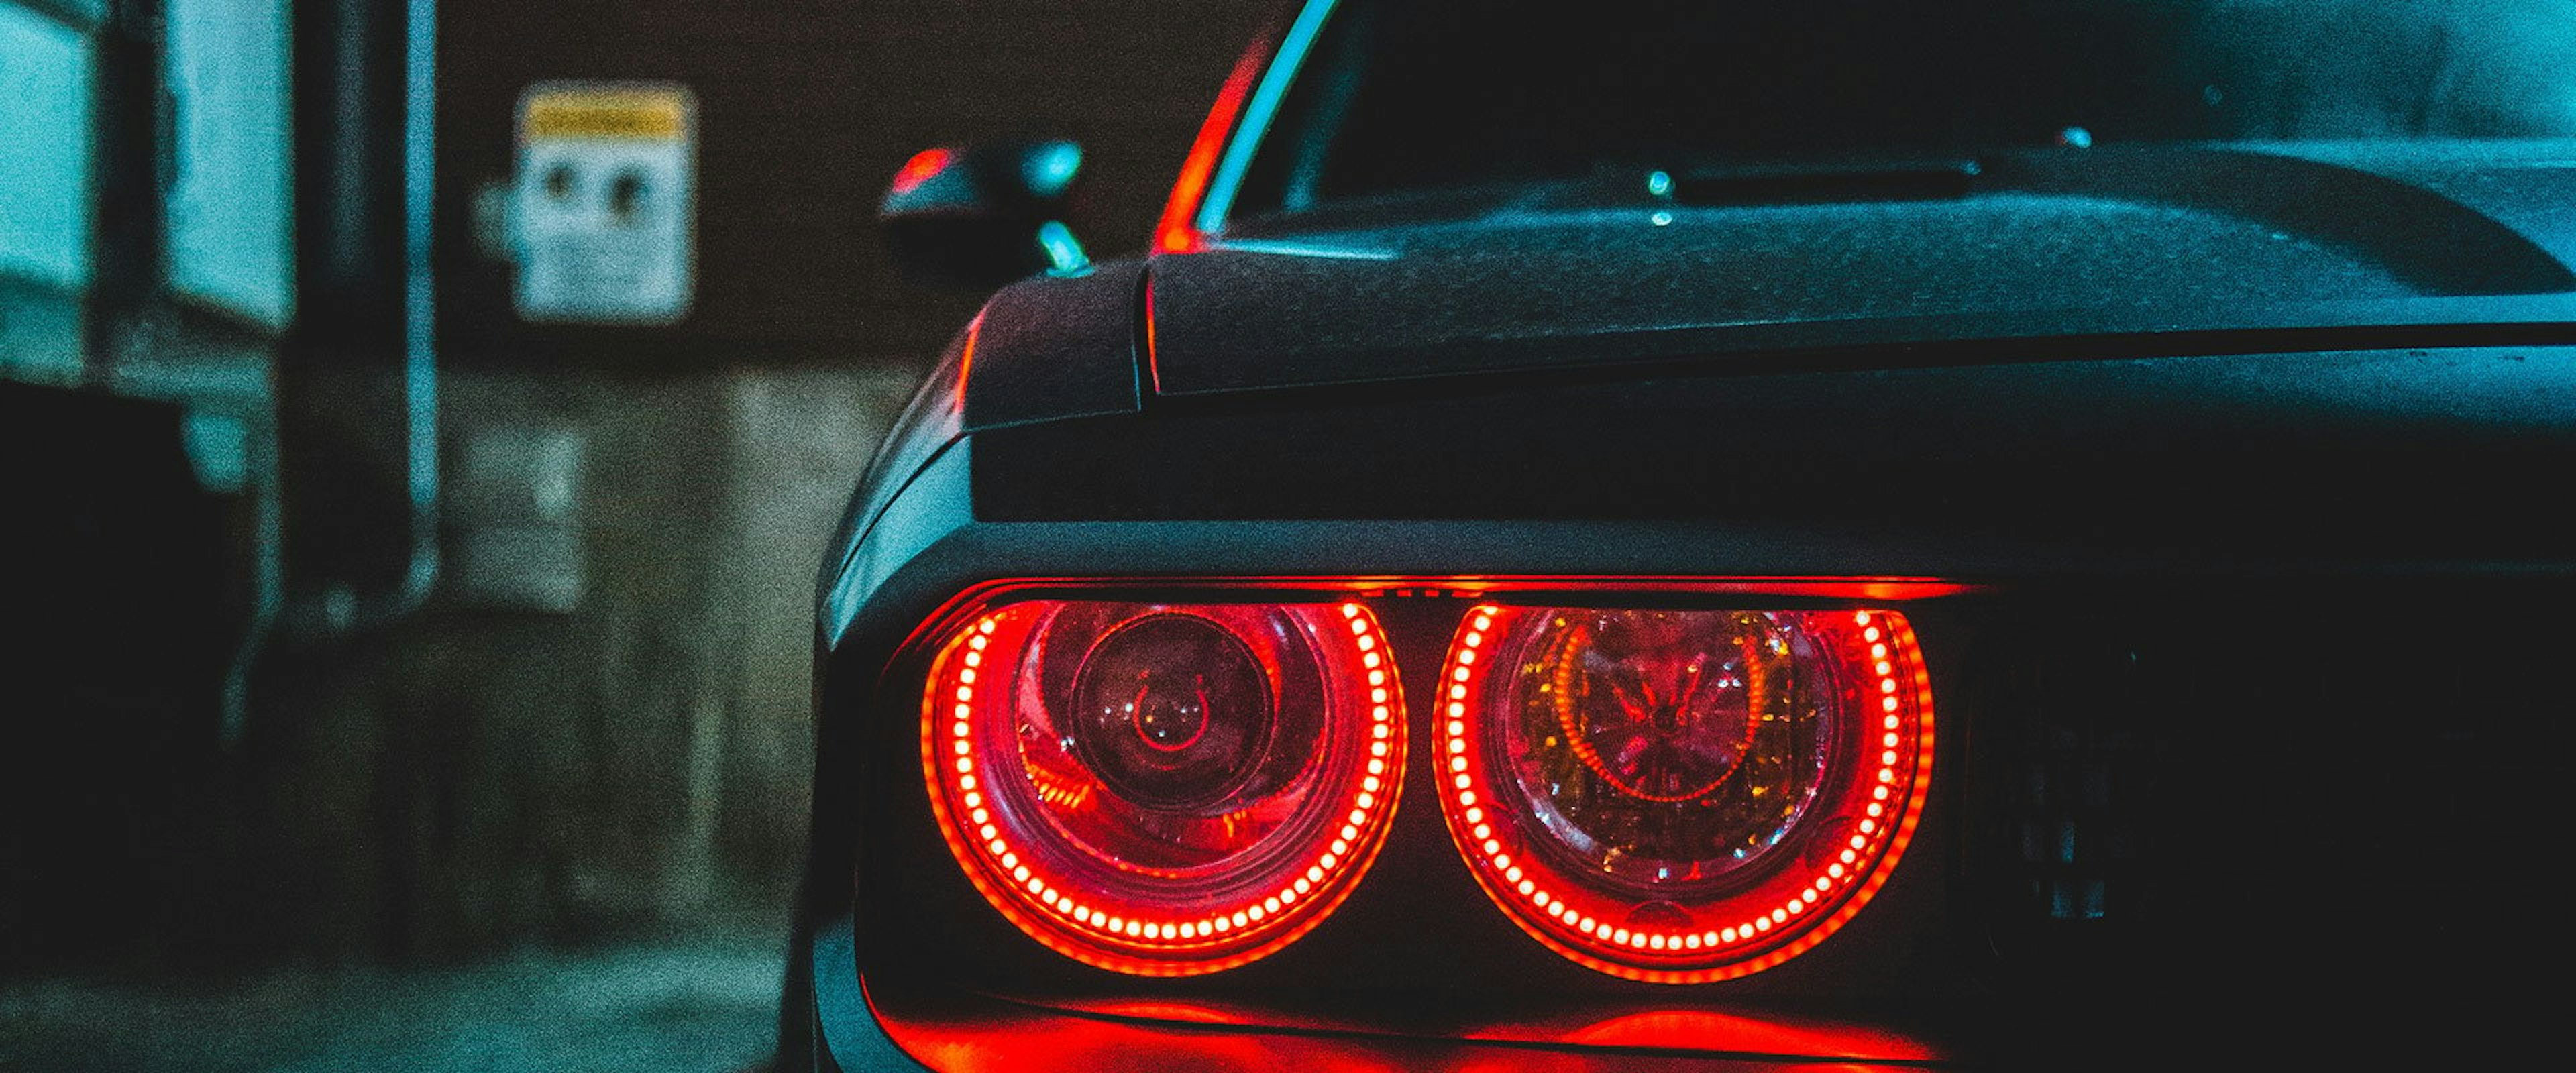 Vibrant fluorescent eclectic vehicle headlight 